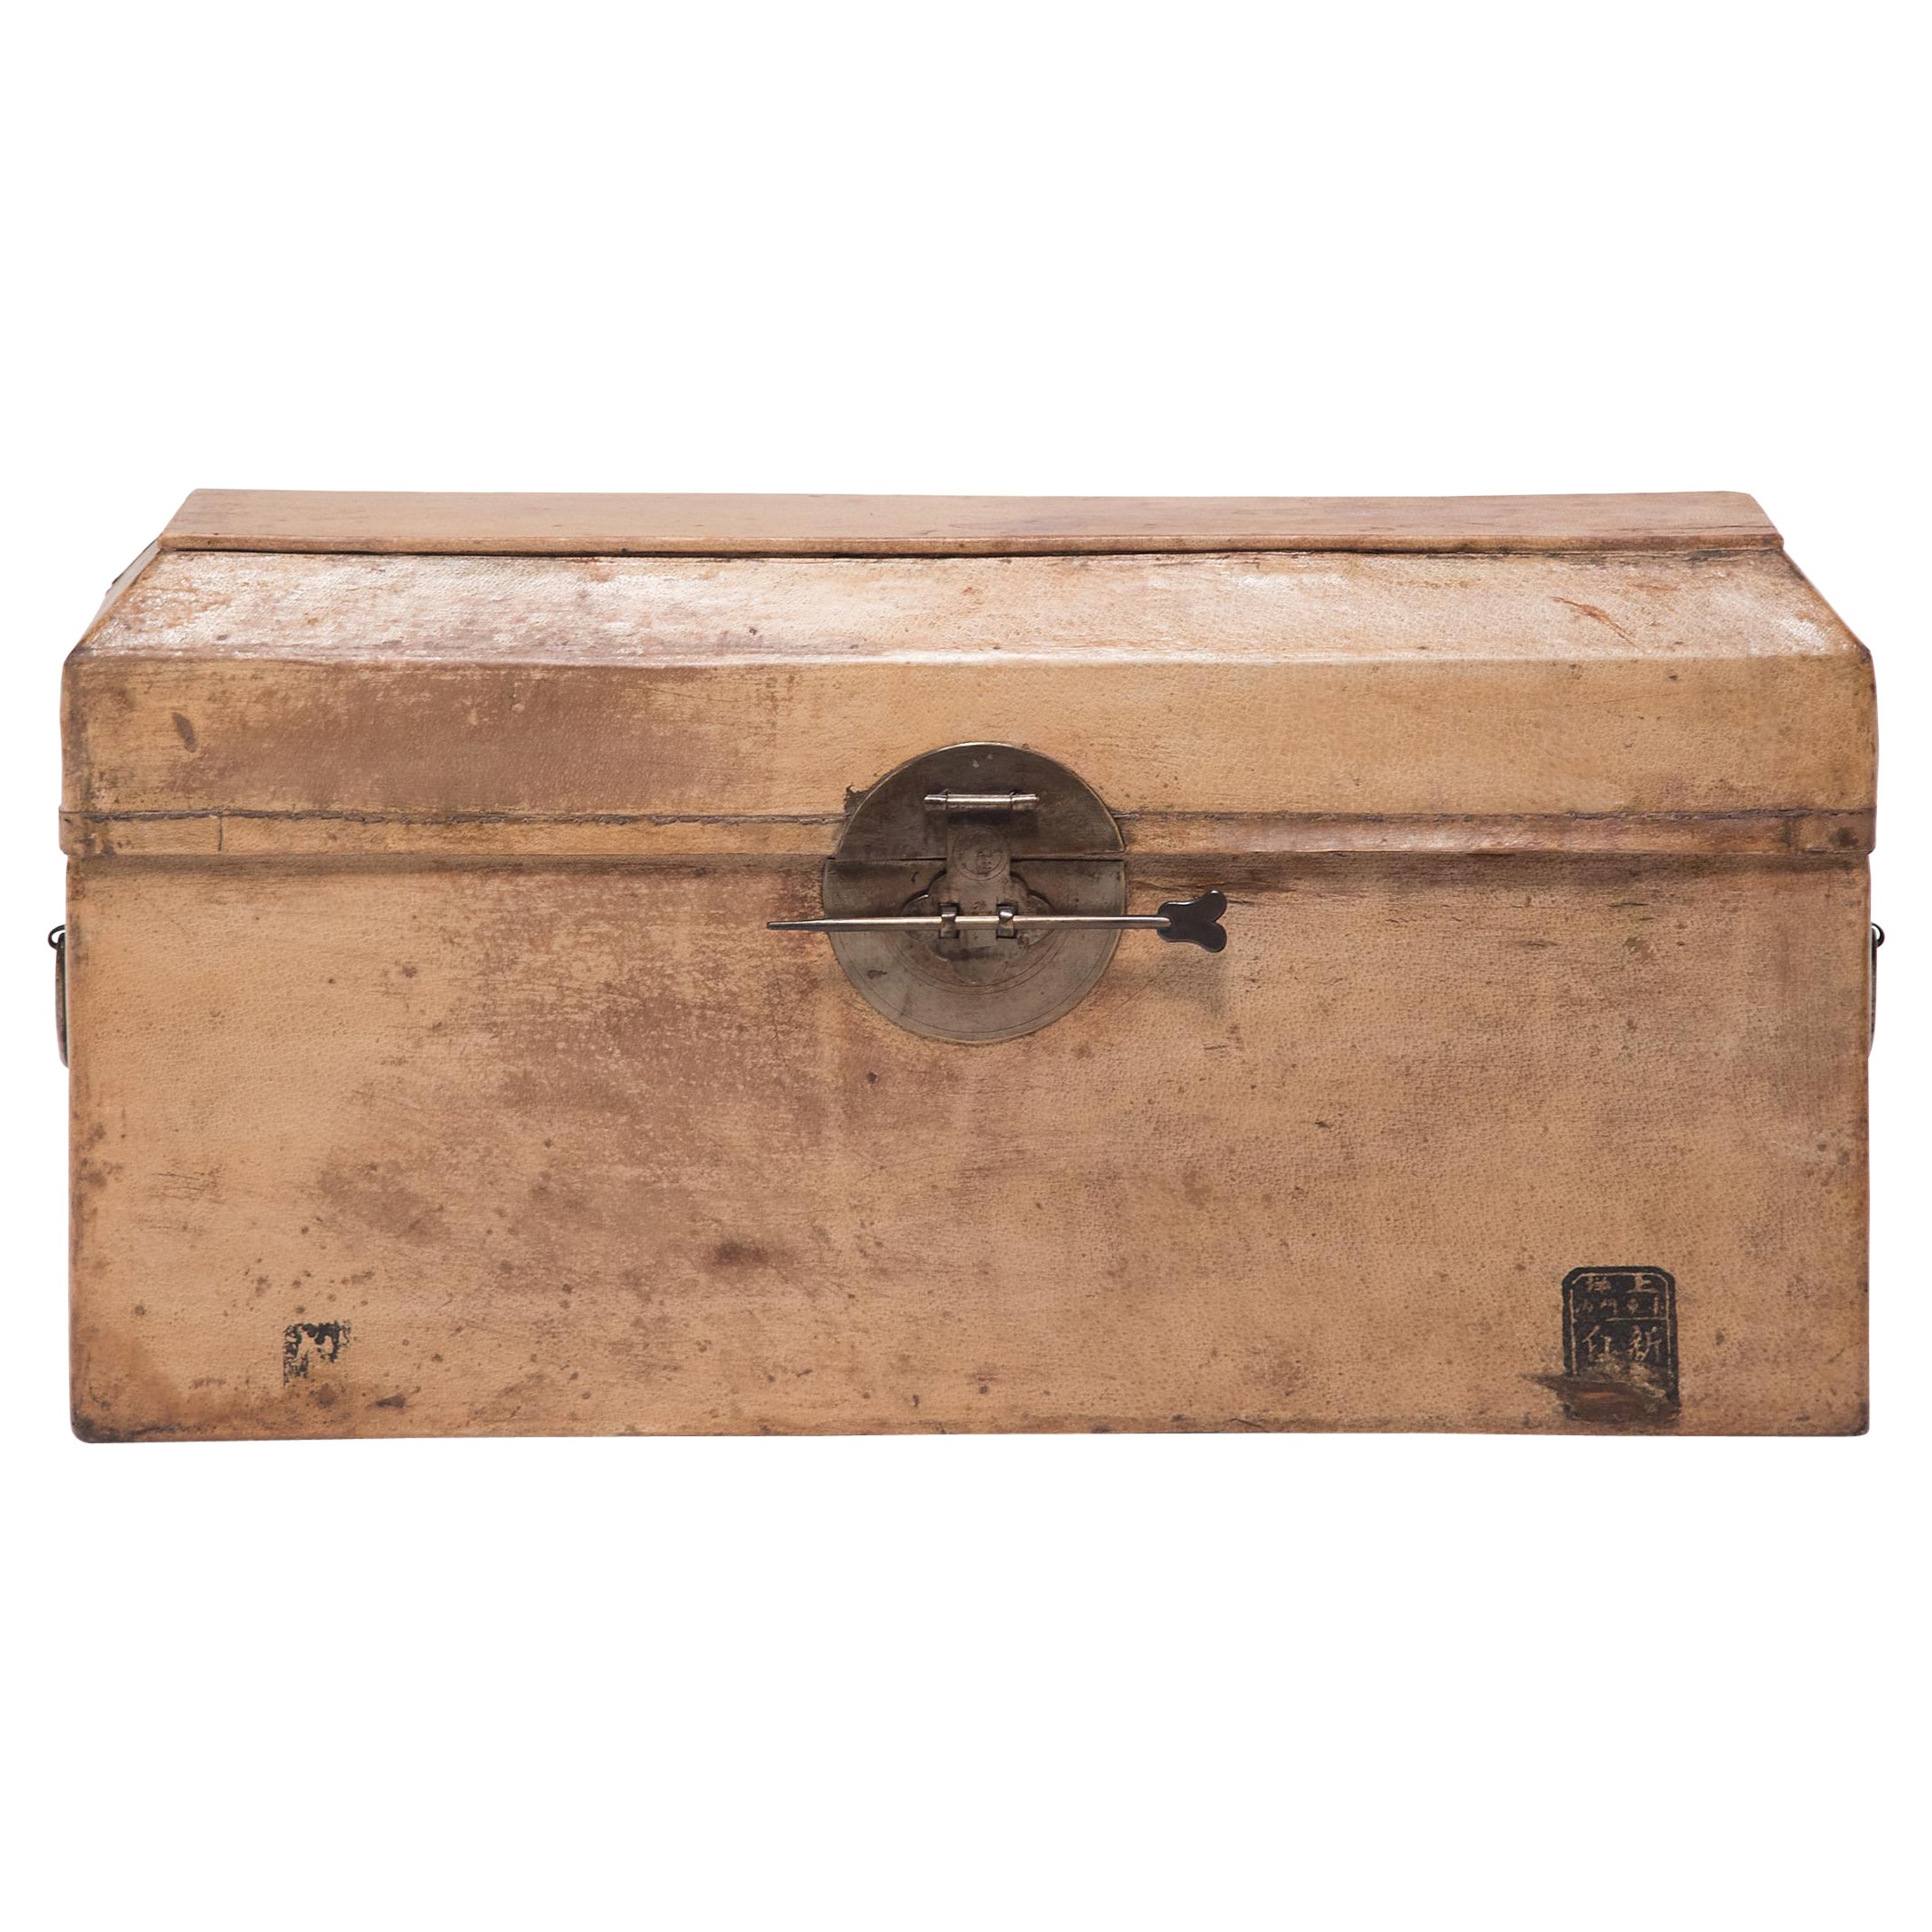 Chinese Hide Document Box, c. 1850